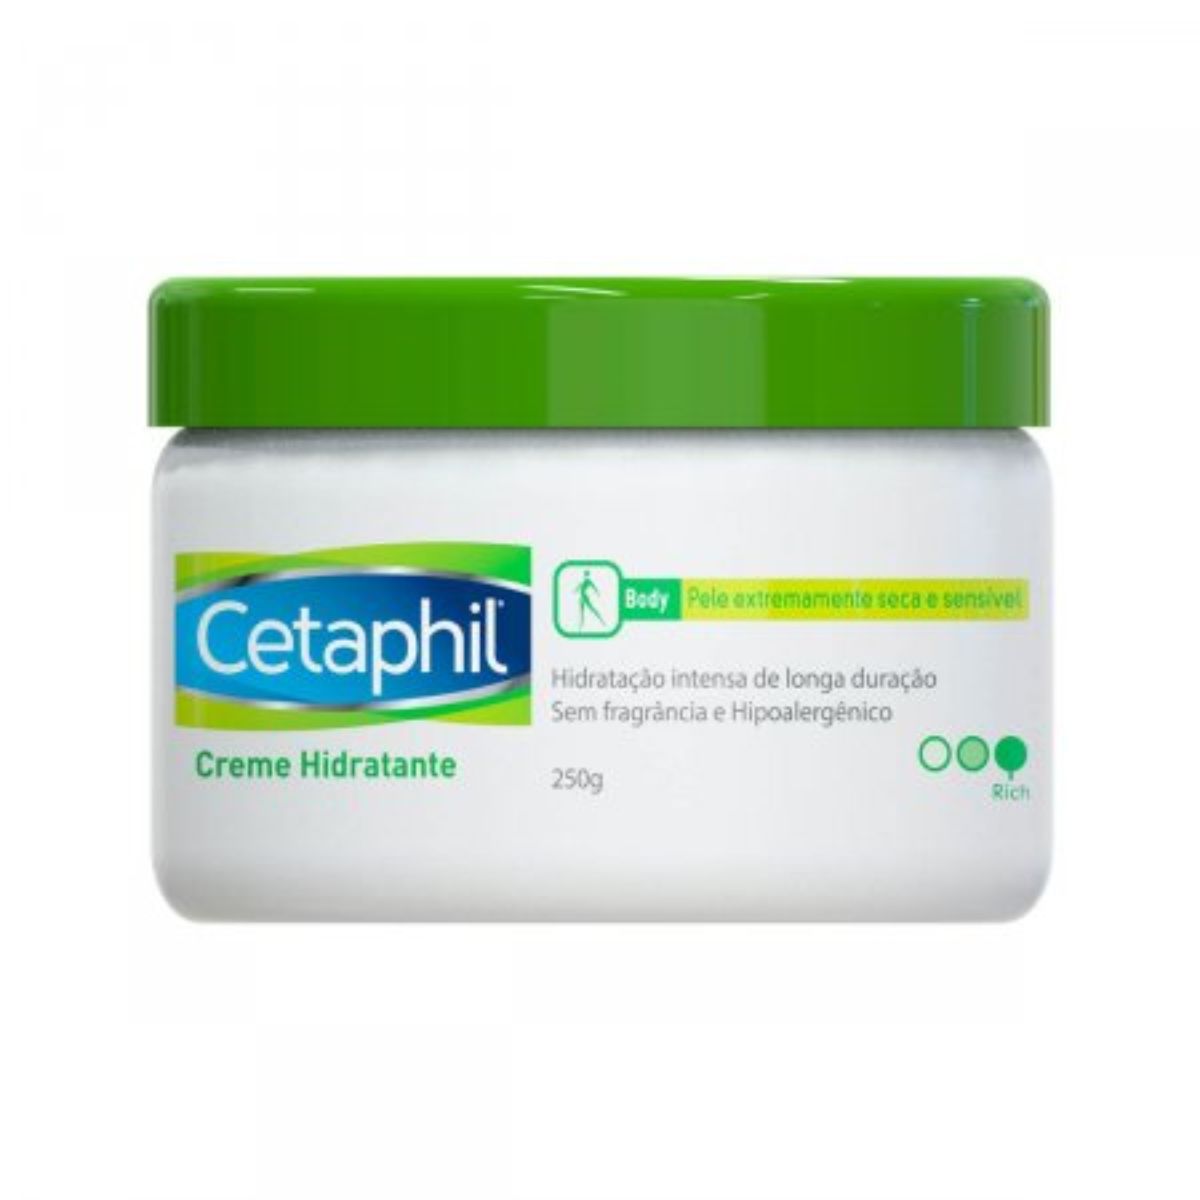 cetaphil-creme-hidratante-250gr-1.jpg